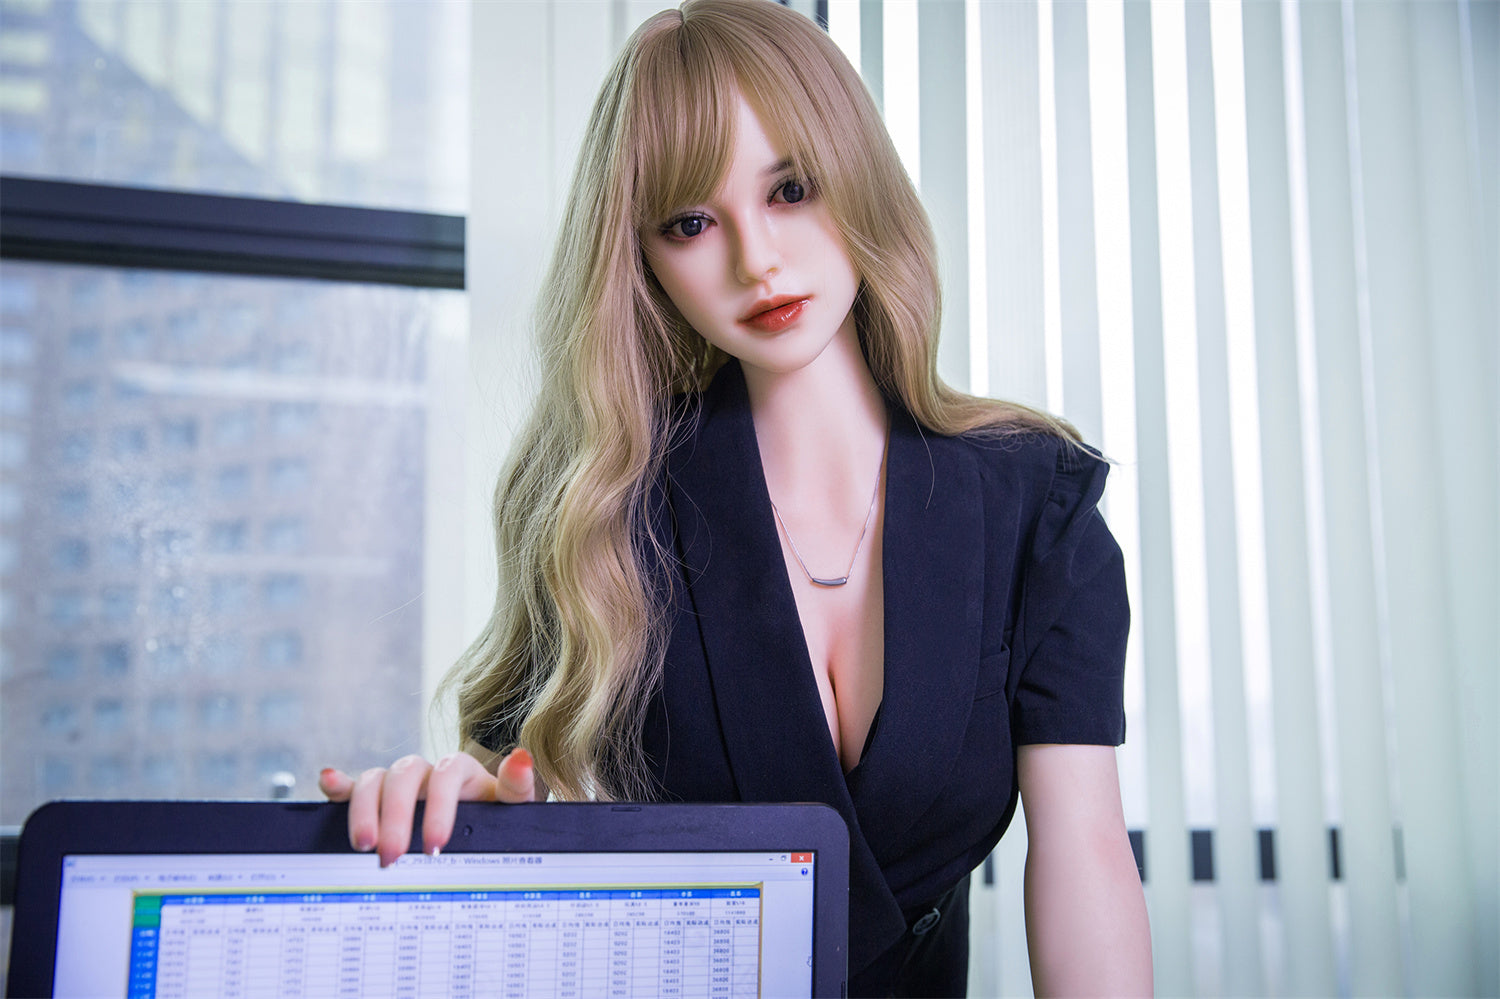 QITA Doll 164 cm Silicone - Joanna | Buy Sex Dolls at DOLLS ACTUALLY